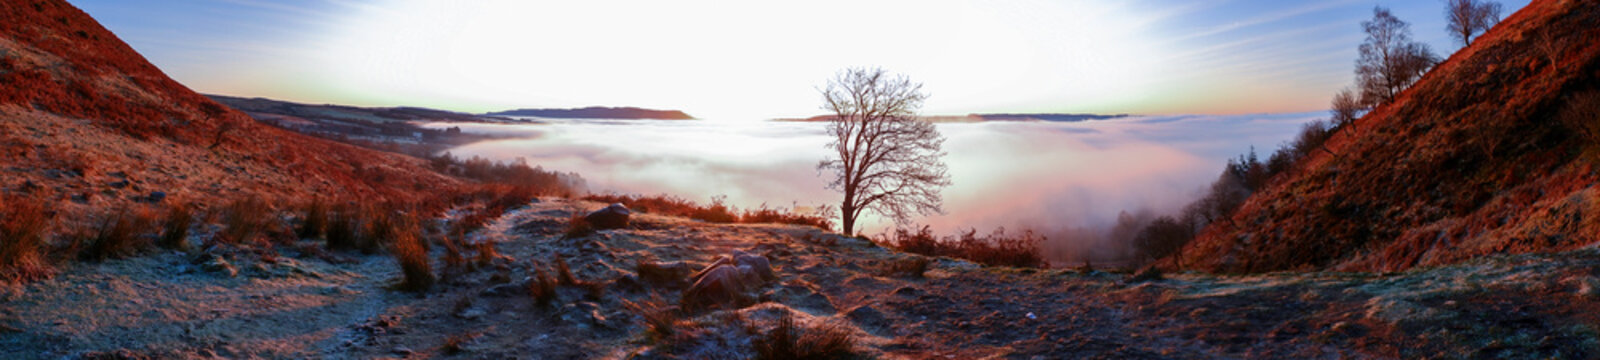 Winter sunrise views from Conic Hill, Loch Lomond Scotland